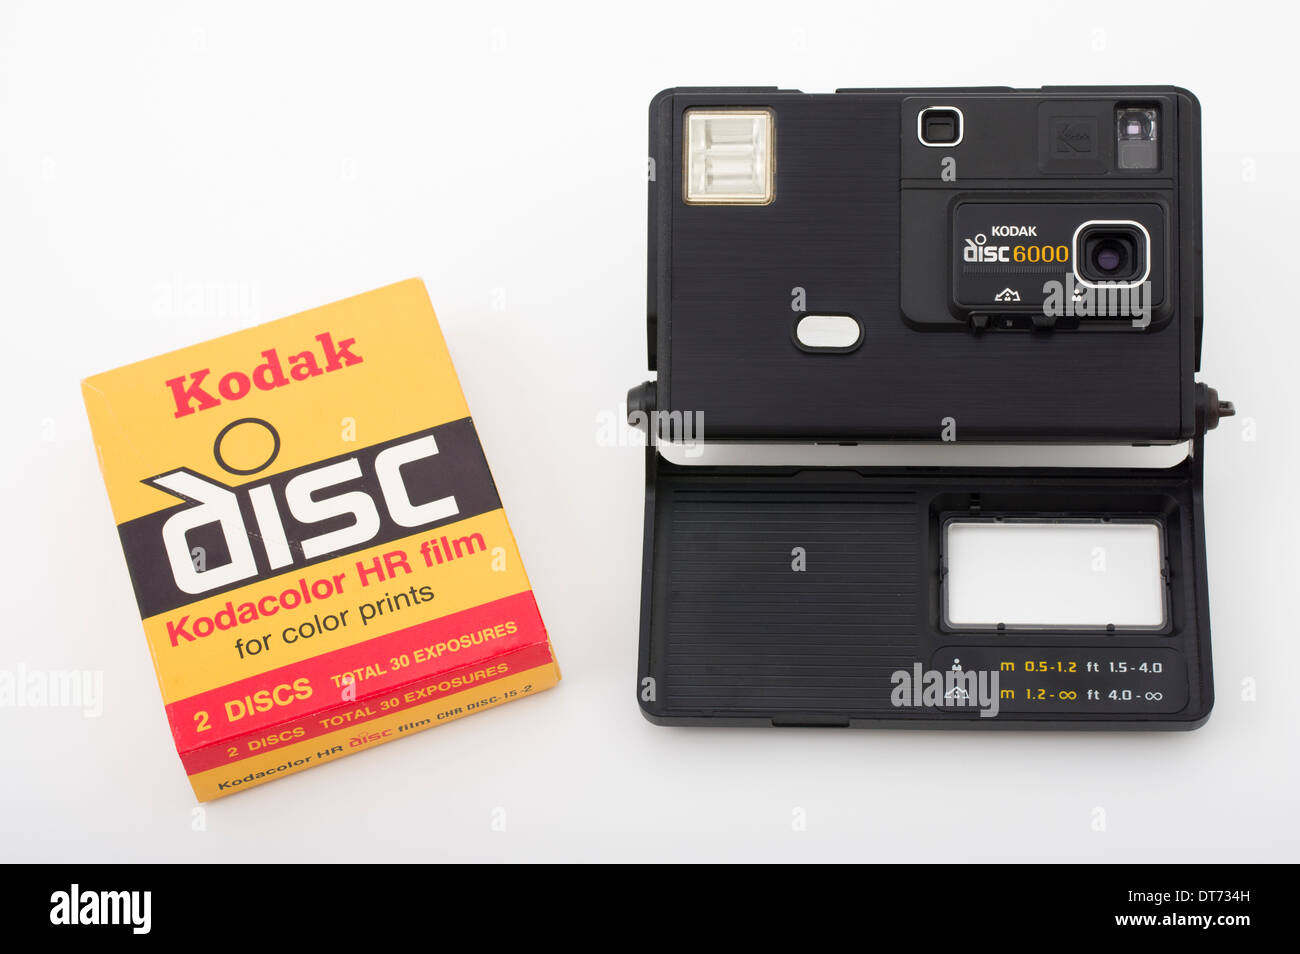 Kodak disc 6000 camera with disc film Stock Photo